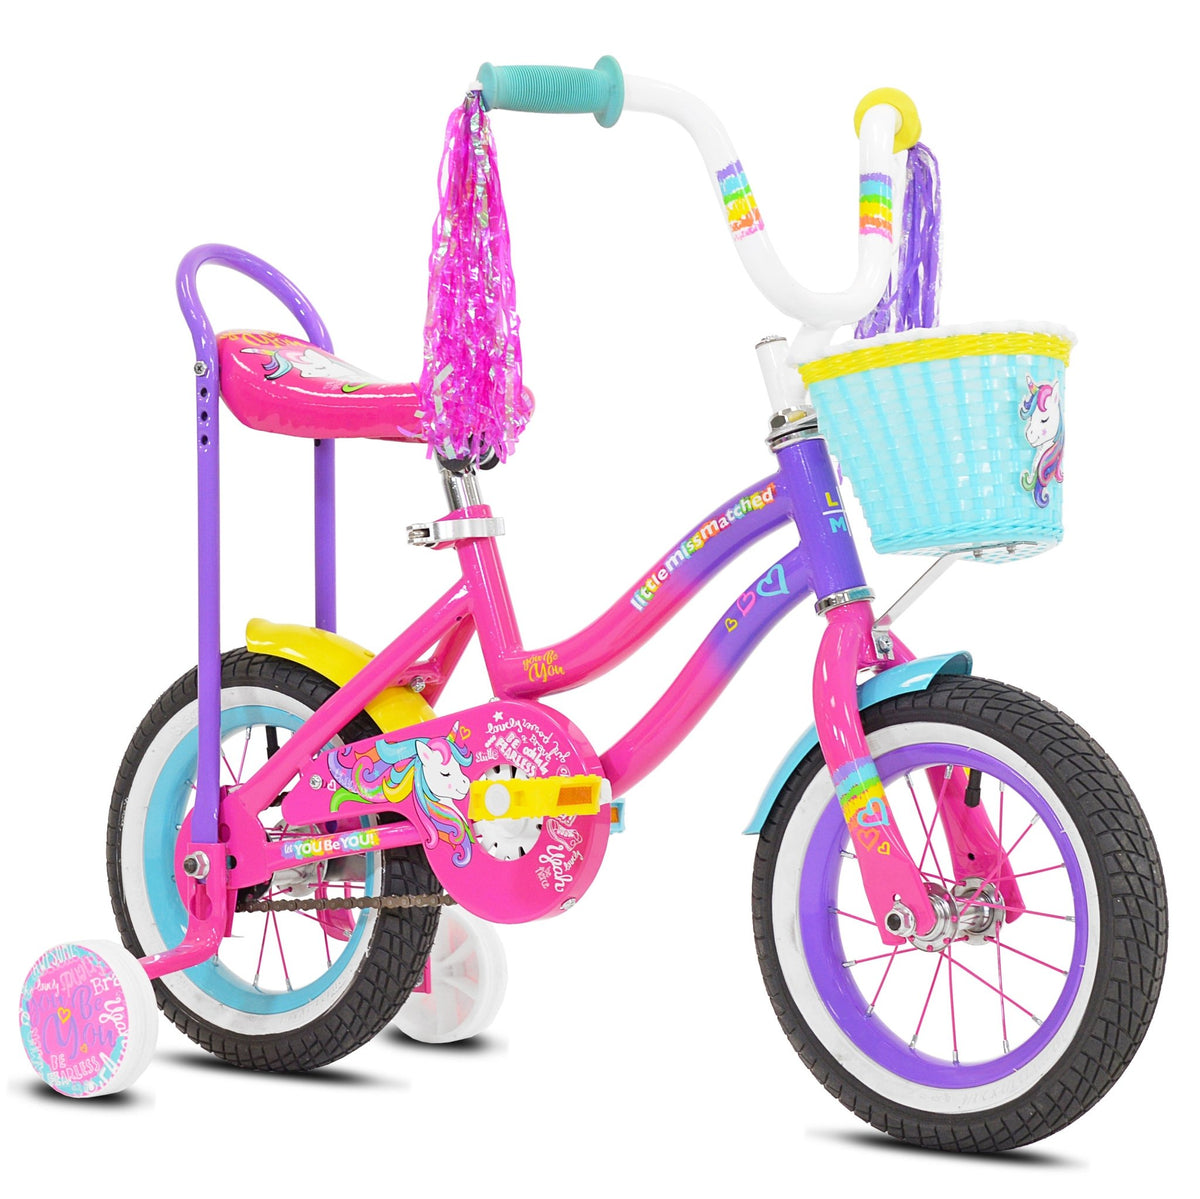 12" LittleMissMatched® Unicorn | Bike for Kids Ages 2-4